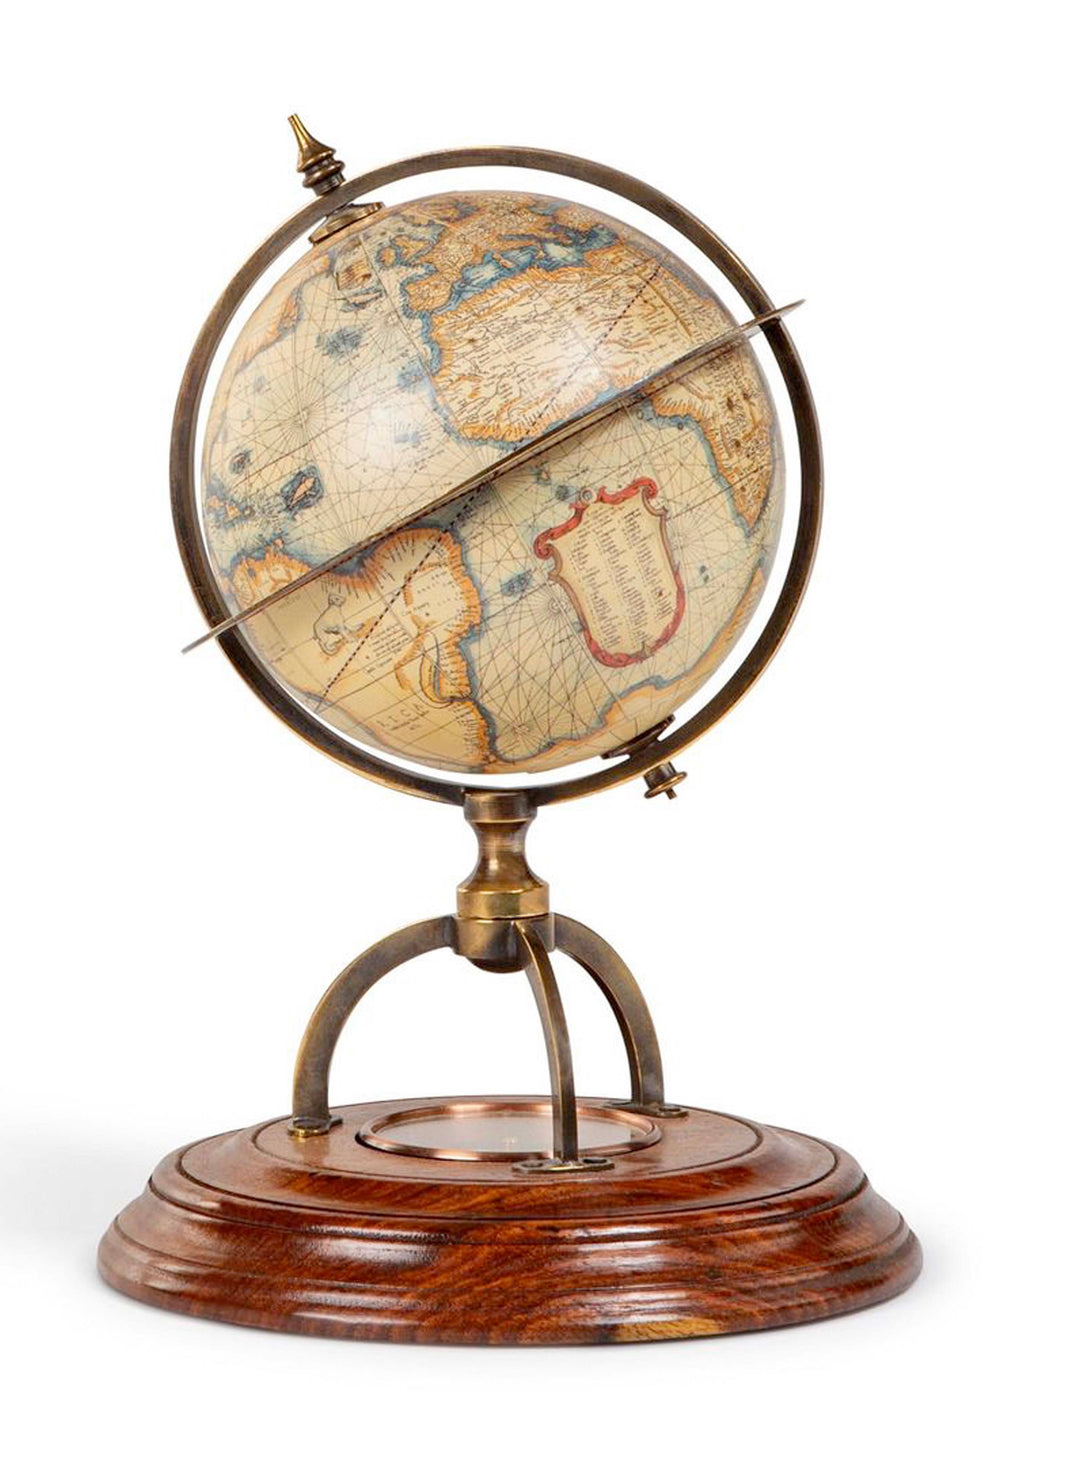 Small vintage globe replica terrestrial globe with compass